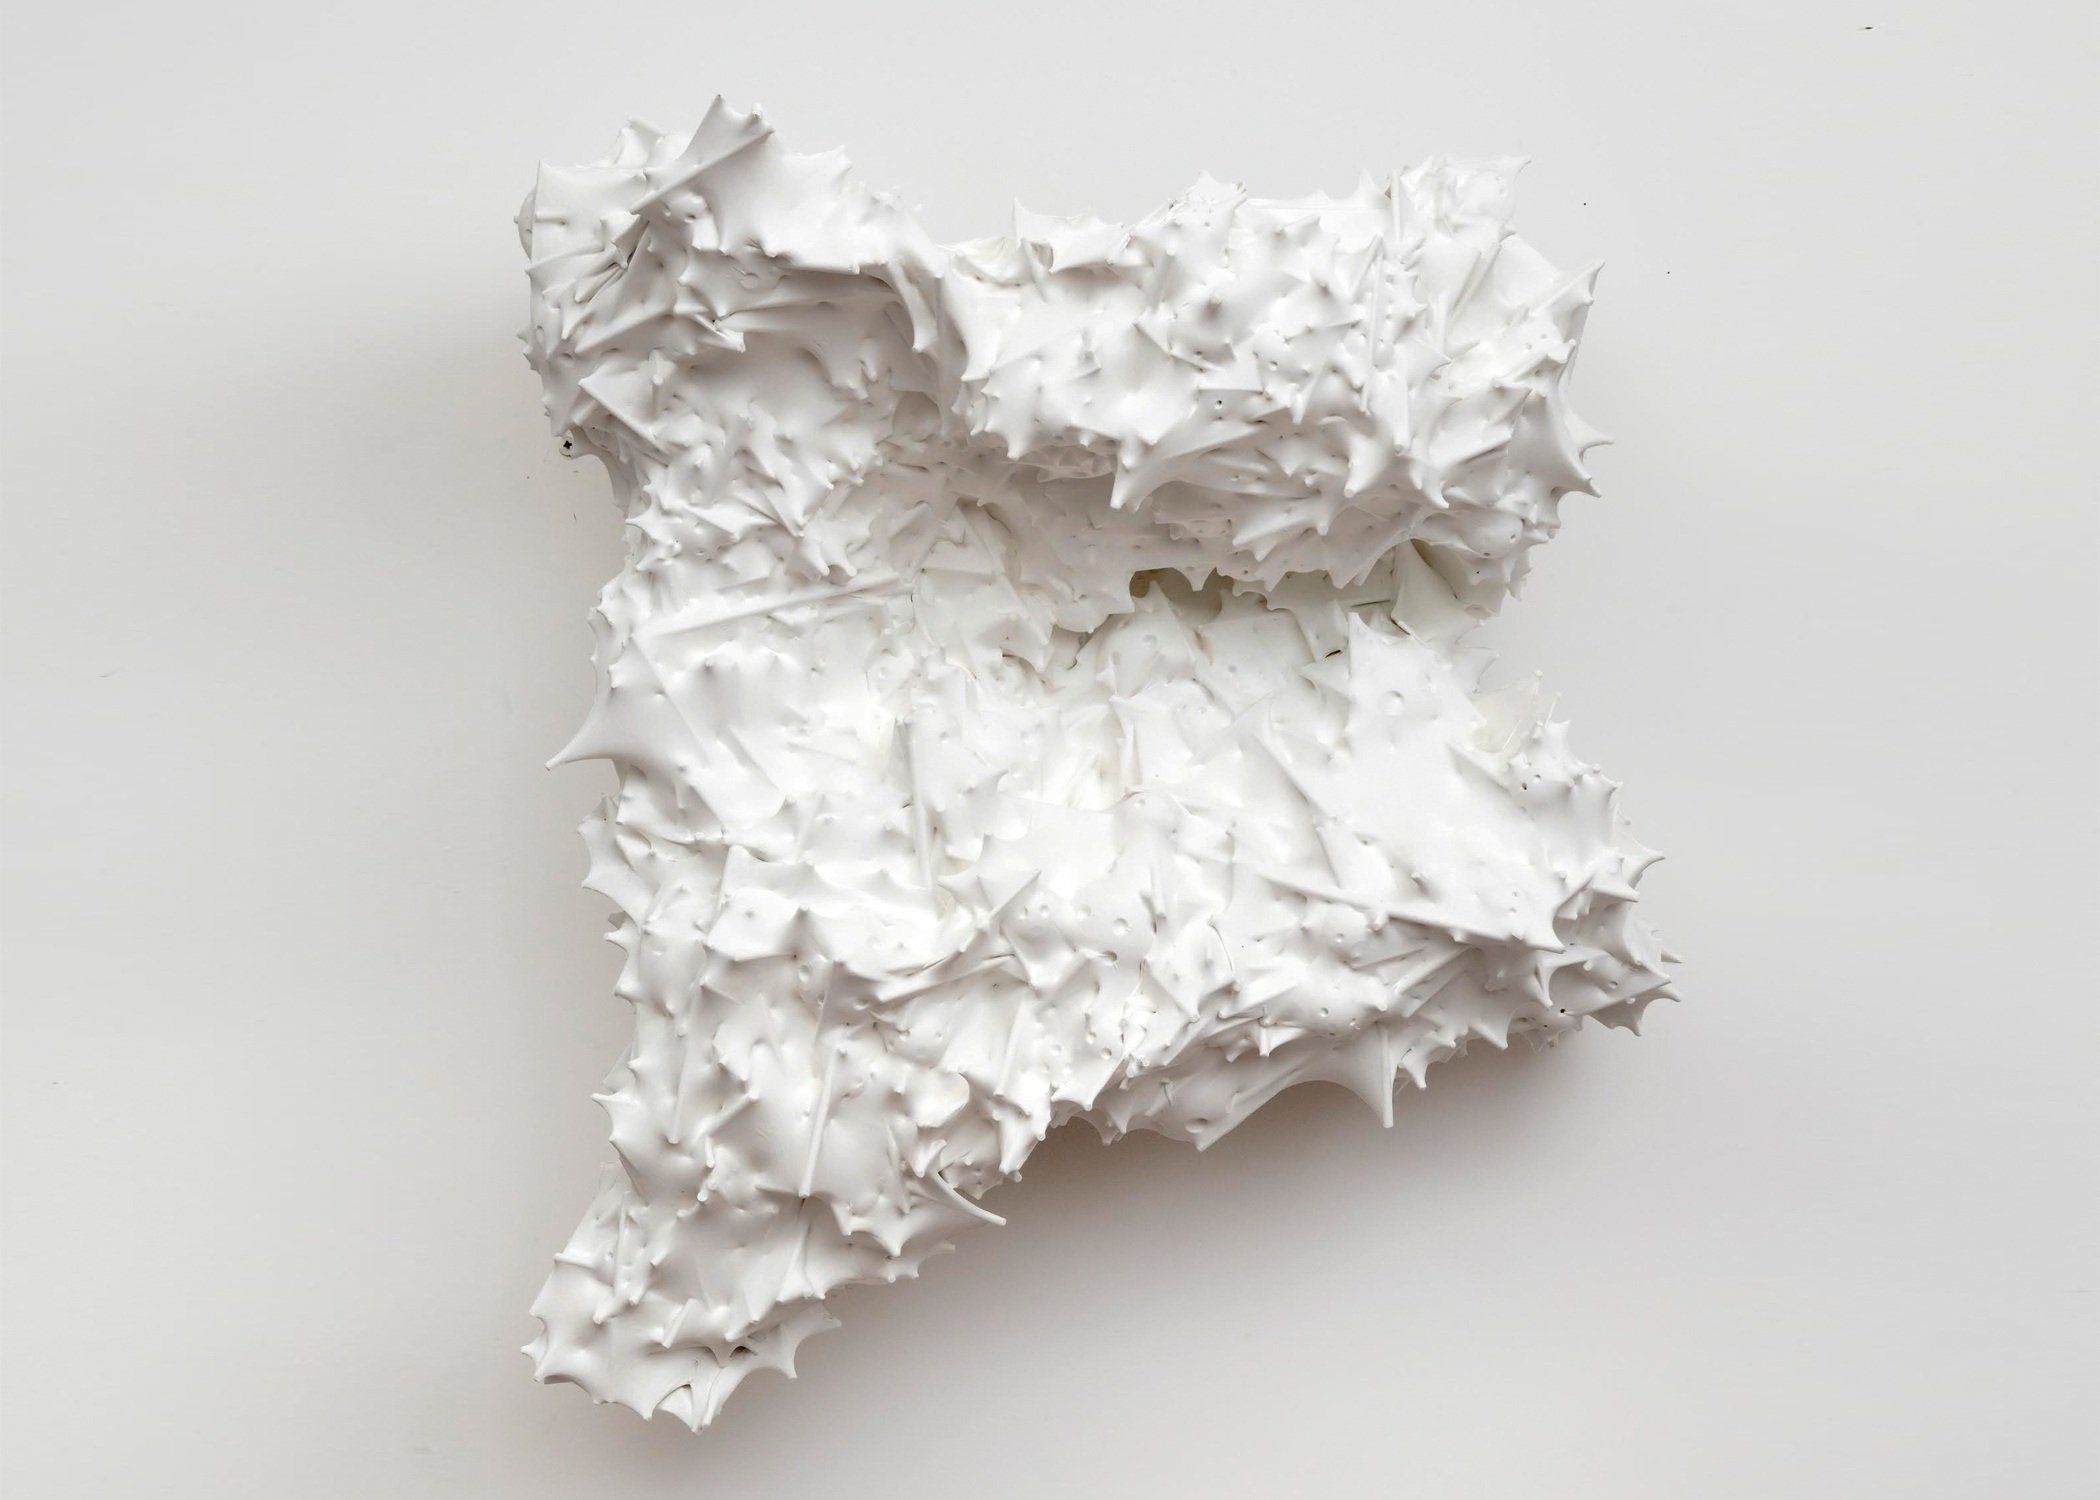   Untitled (collapsing), &nbsp;2014 silk, acrylic, wood, thread plastic, and epoxy 36 x 32 x 16 inches 91.4 x 81.3 x 40.6 cm 